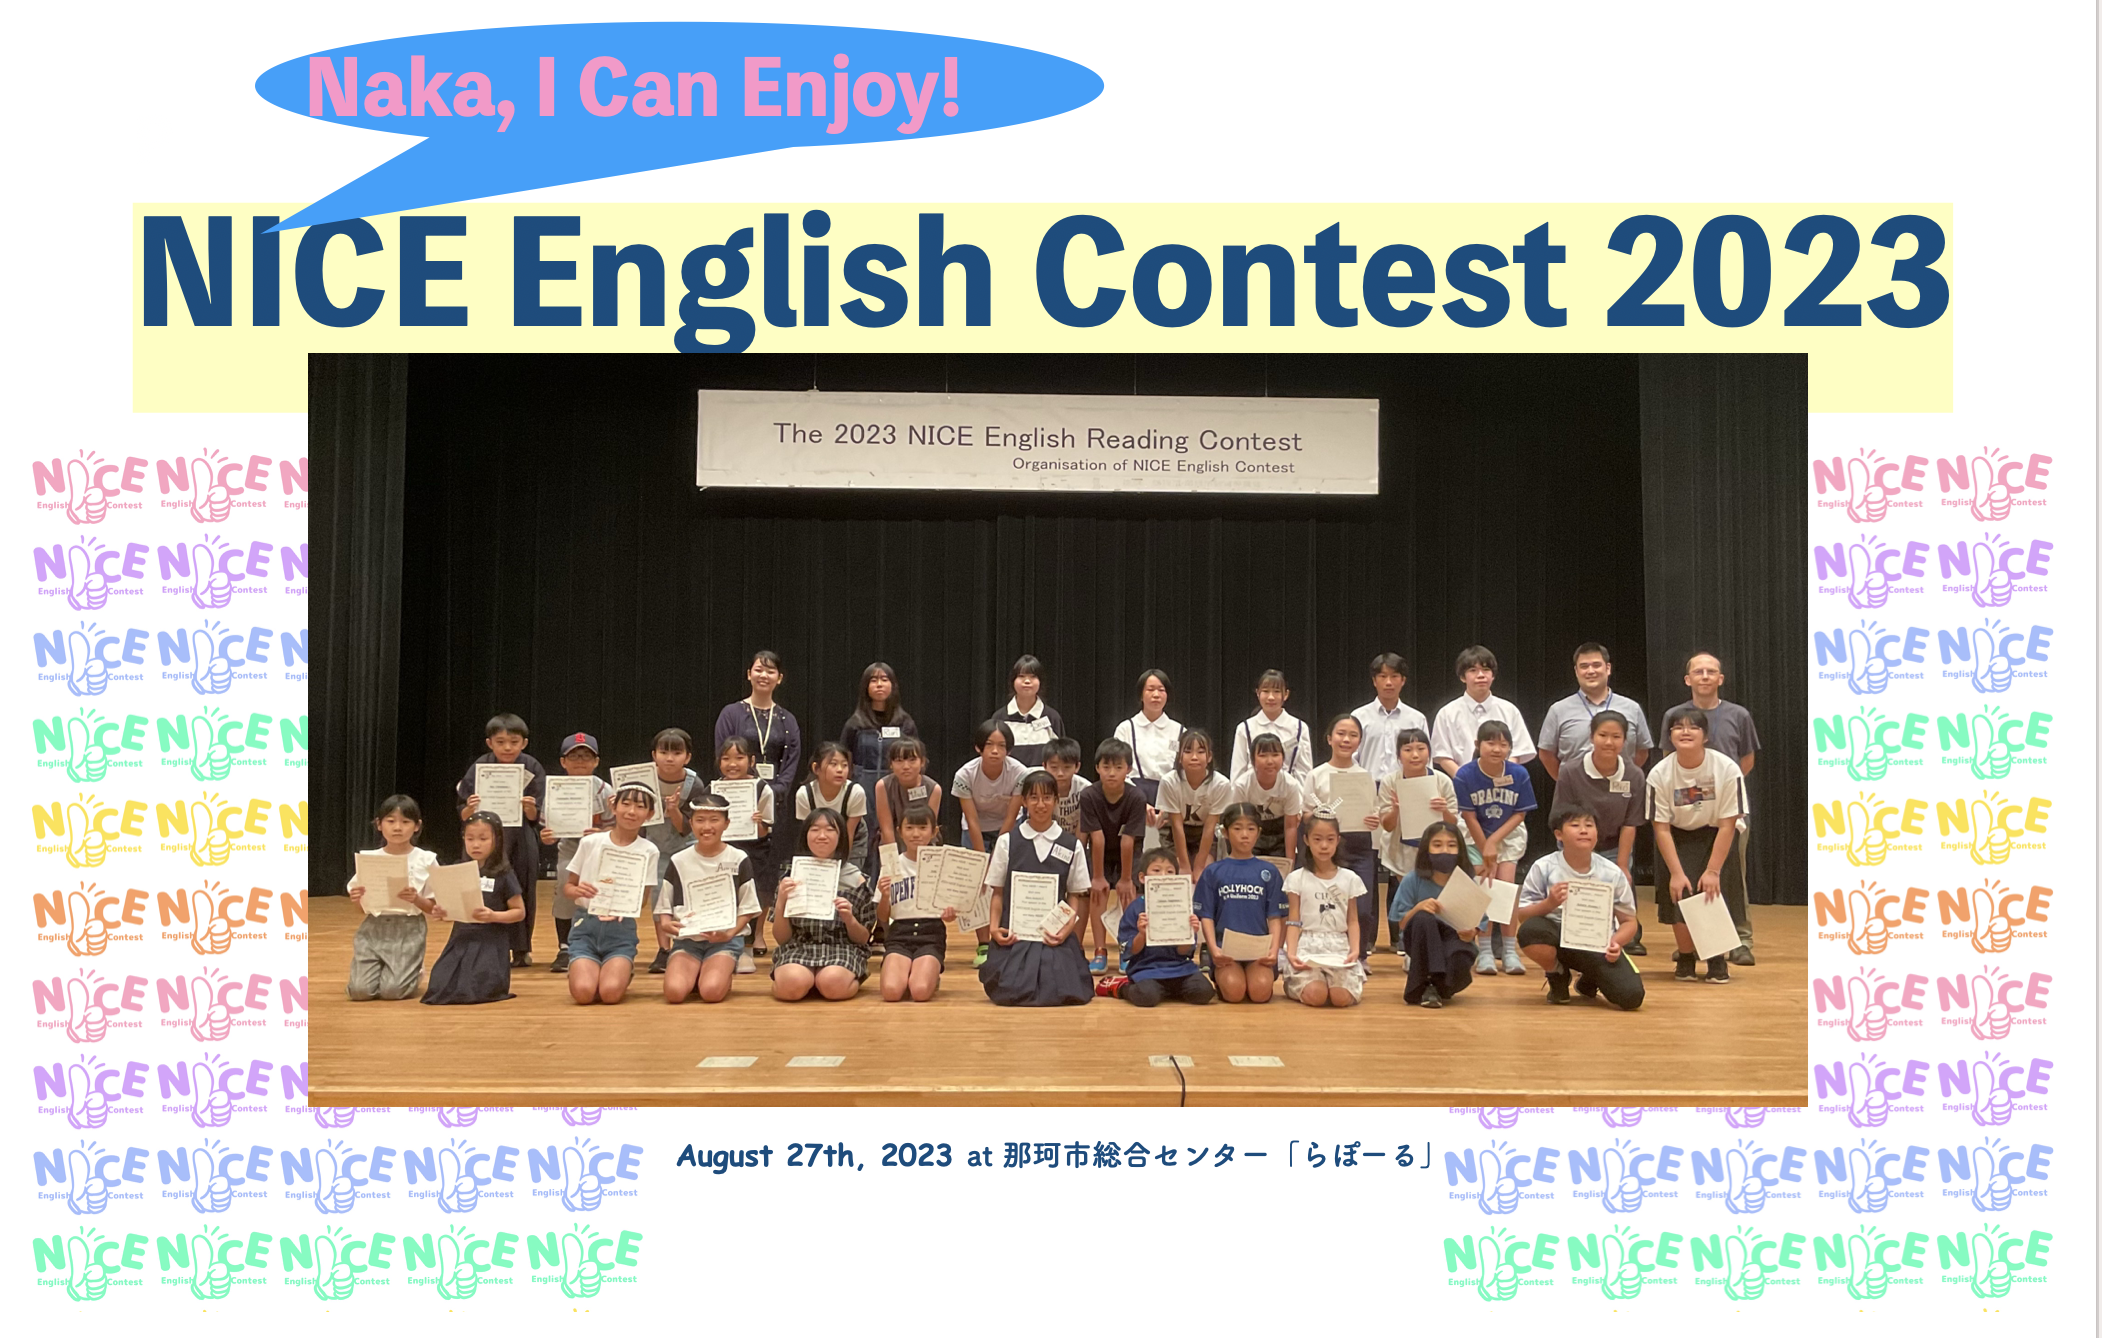 NICE English Contest 2023 ビデオ